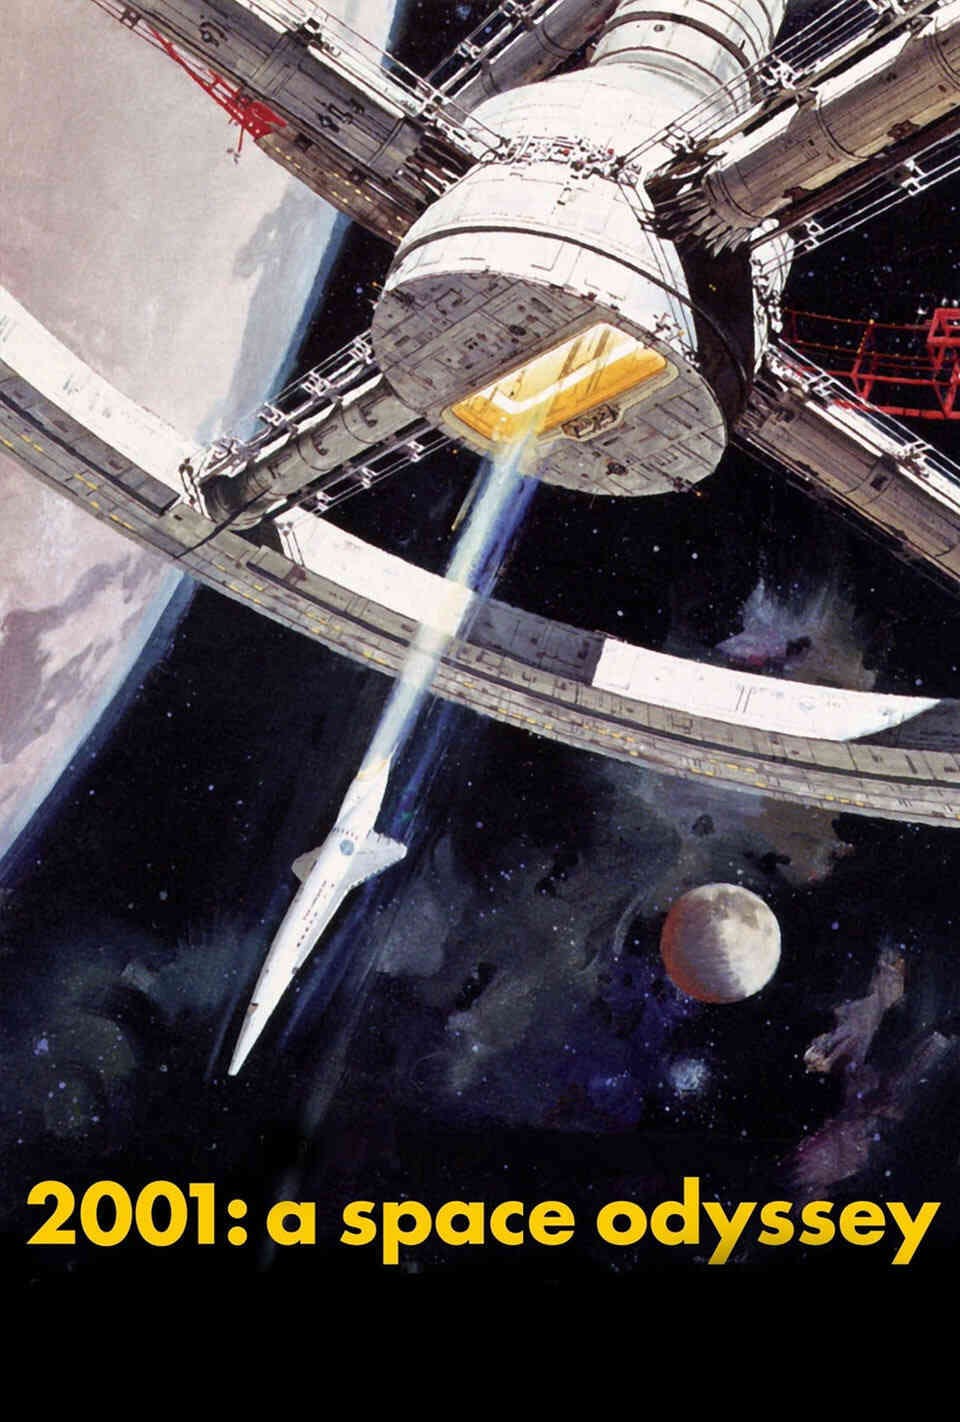 Read A Space Odyssey screenplay.